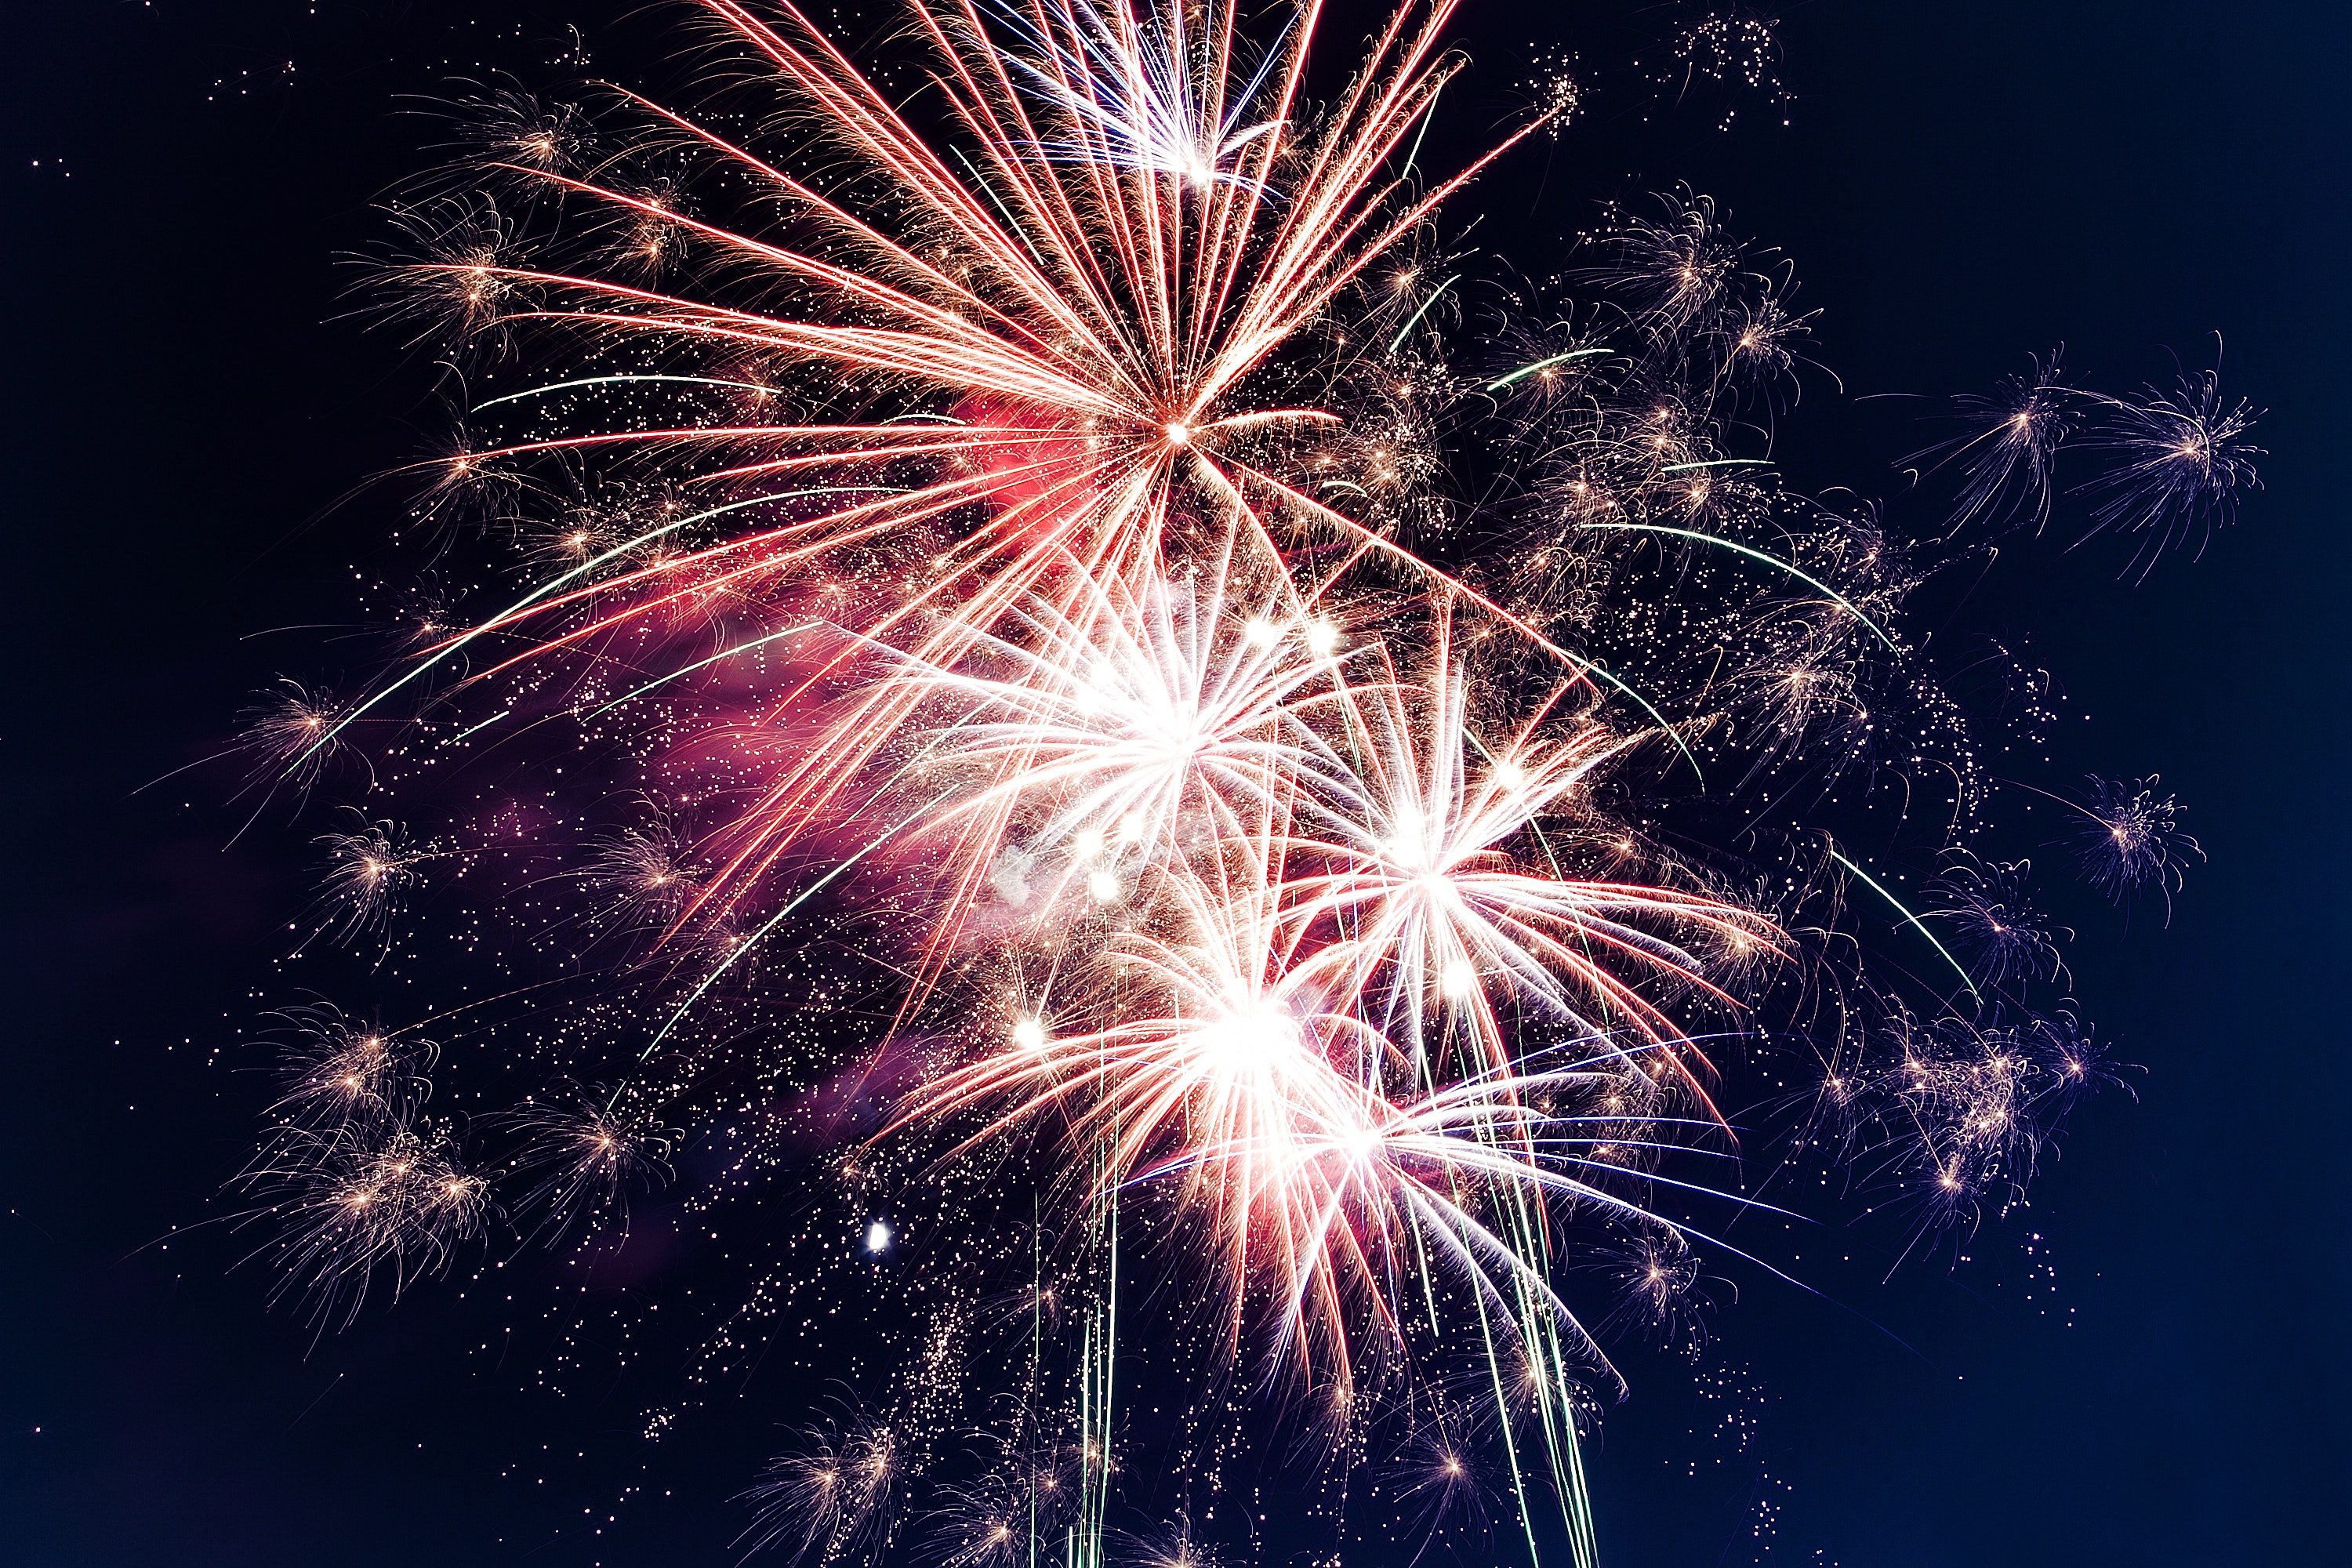 100+ Great Fireworks Photos · Pexels · Free Stock Photos